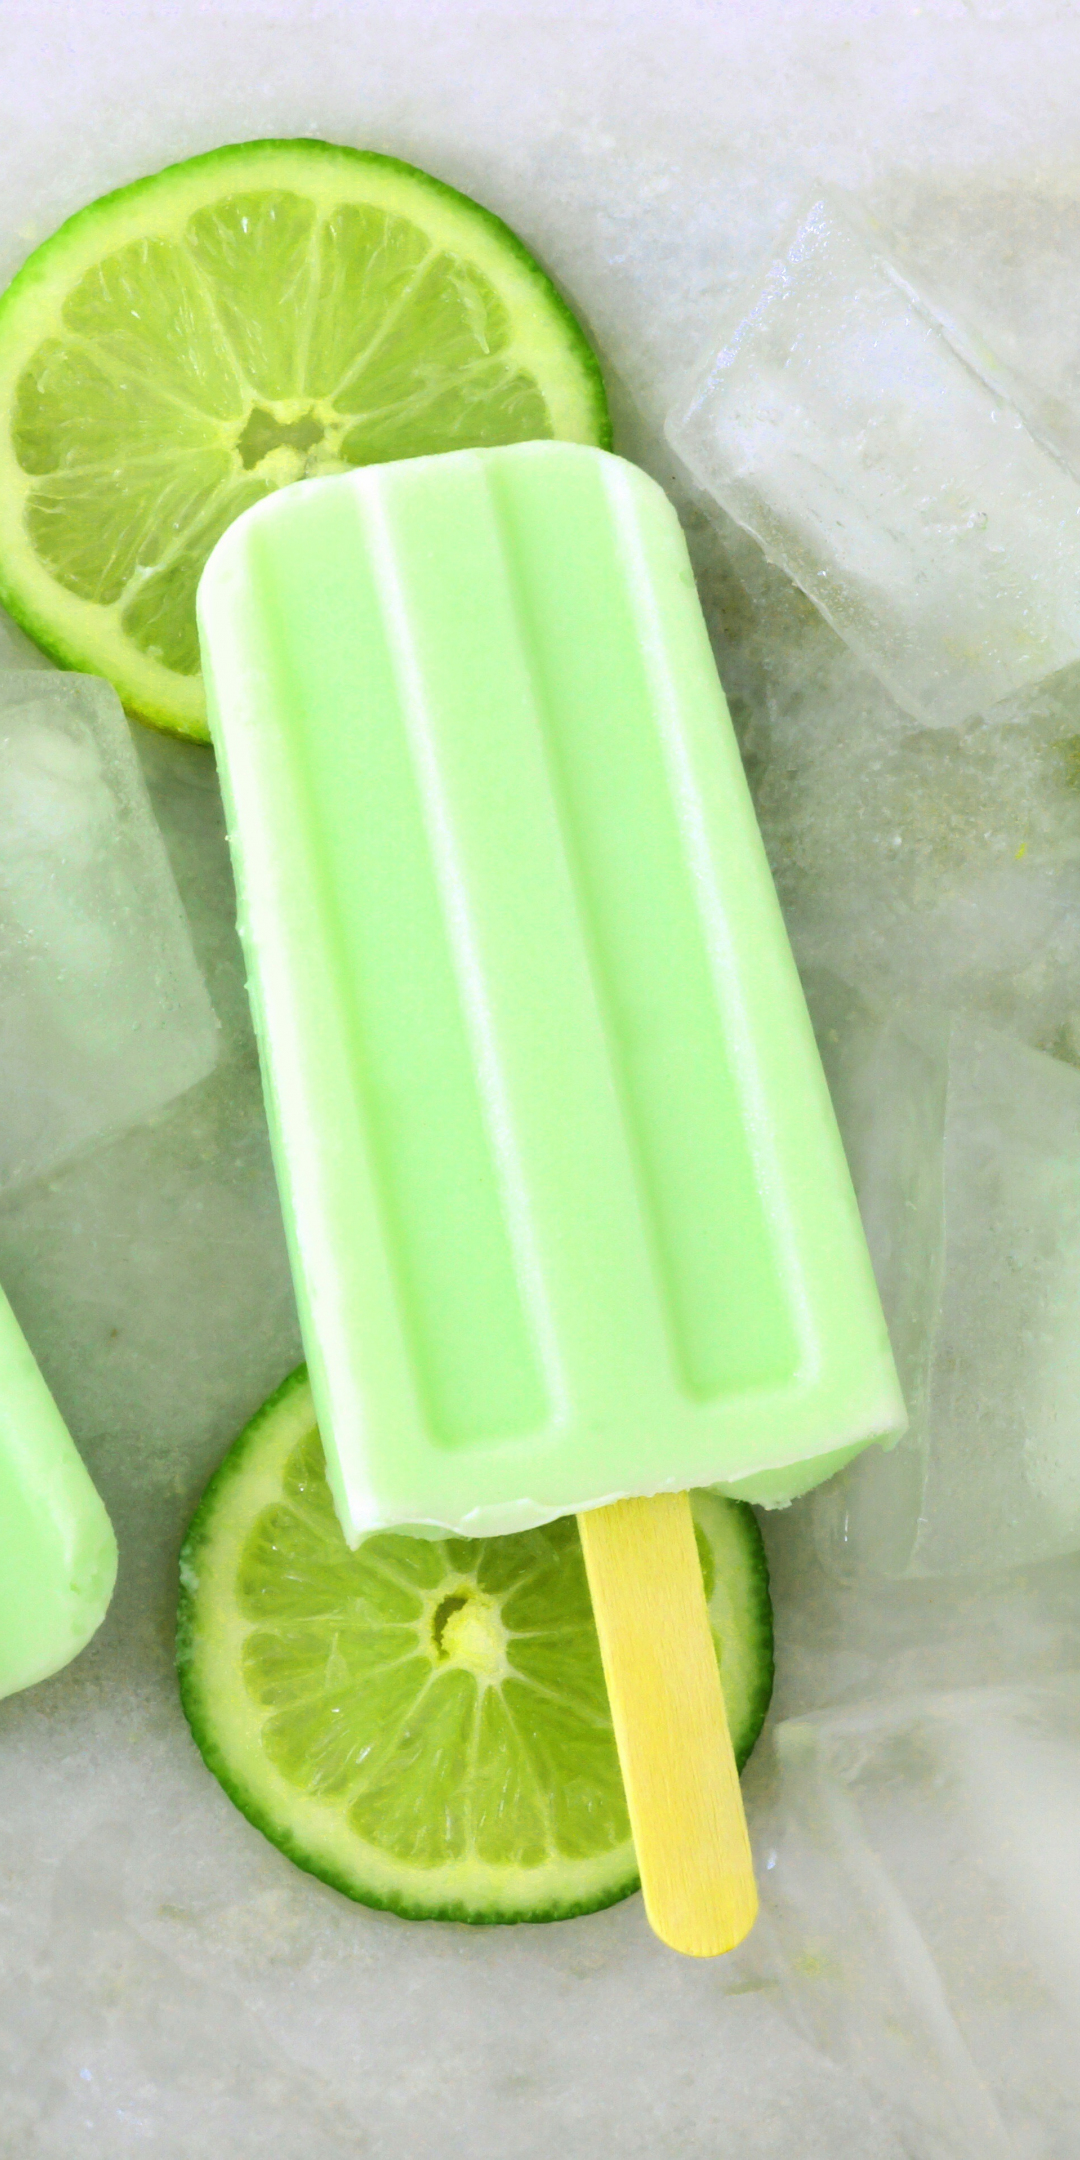 Green ice candies, lemon slices, summer, 1080x2160 wallpaper